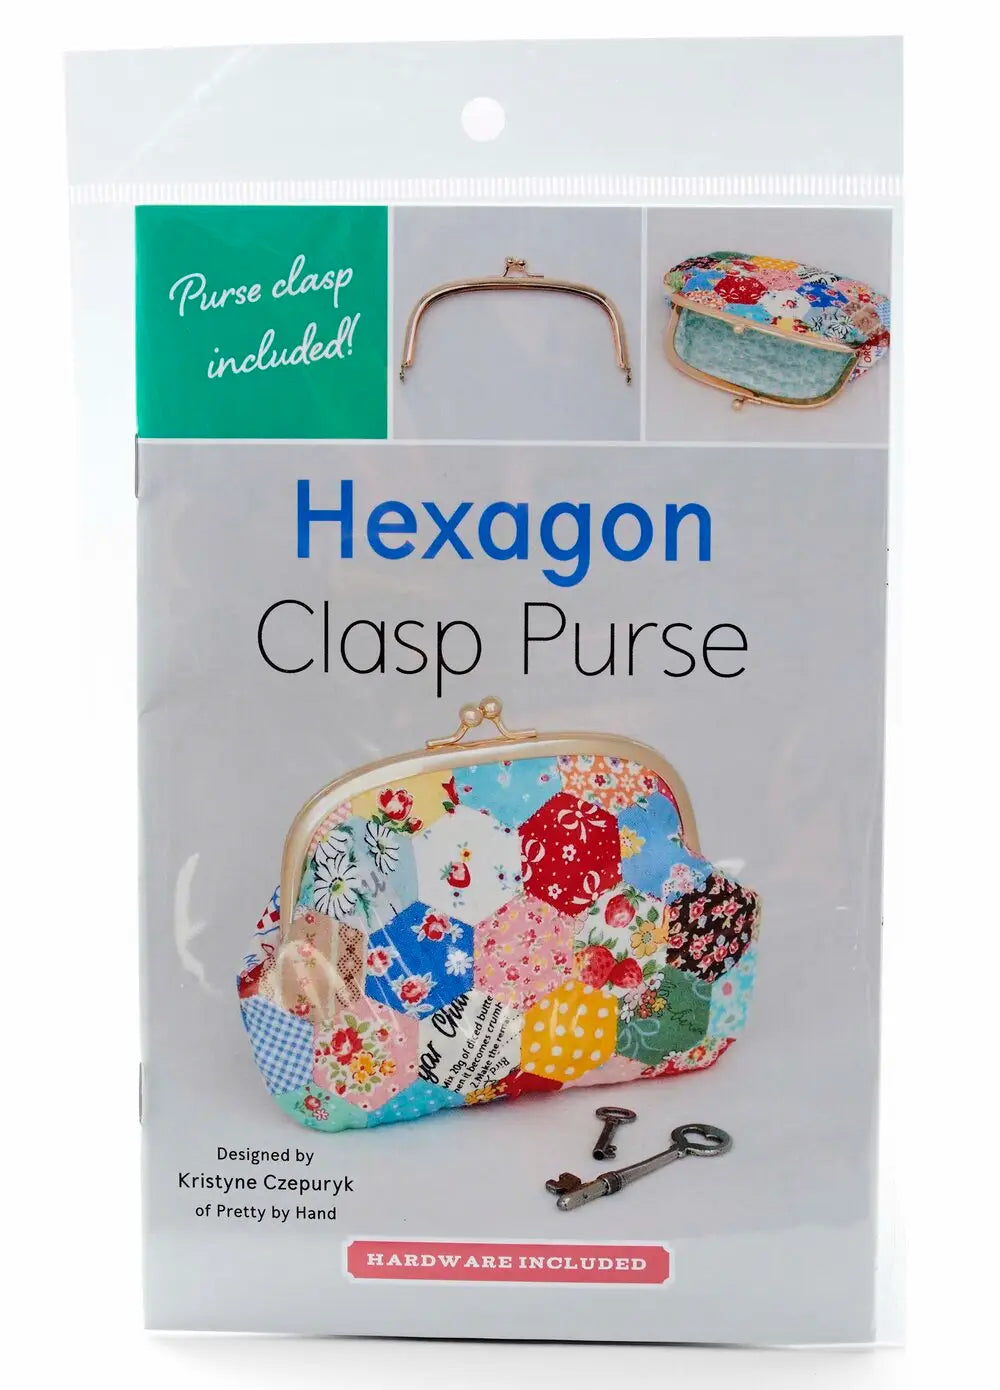 Craftermoon - Hexagon Clasp Purse Pattern